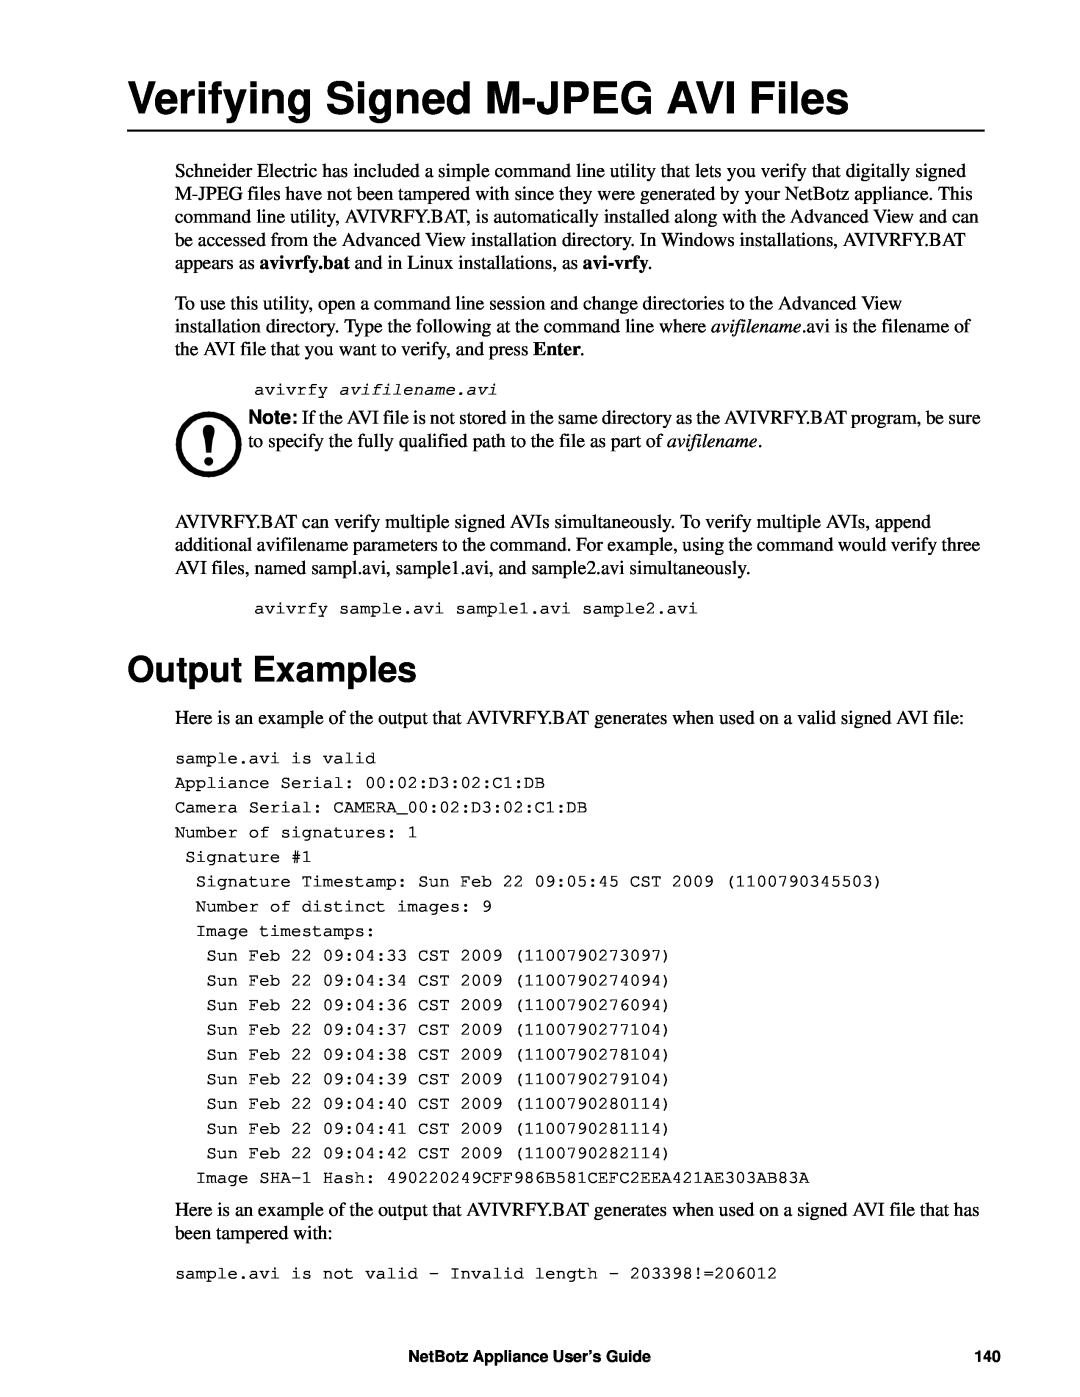 APC NBRK0550, NBRK0450, NBRK0570 manual Verifying Signed M-JPEGAVI Files, Output Examples 